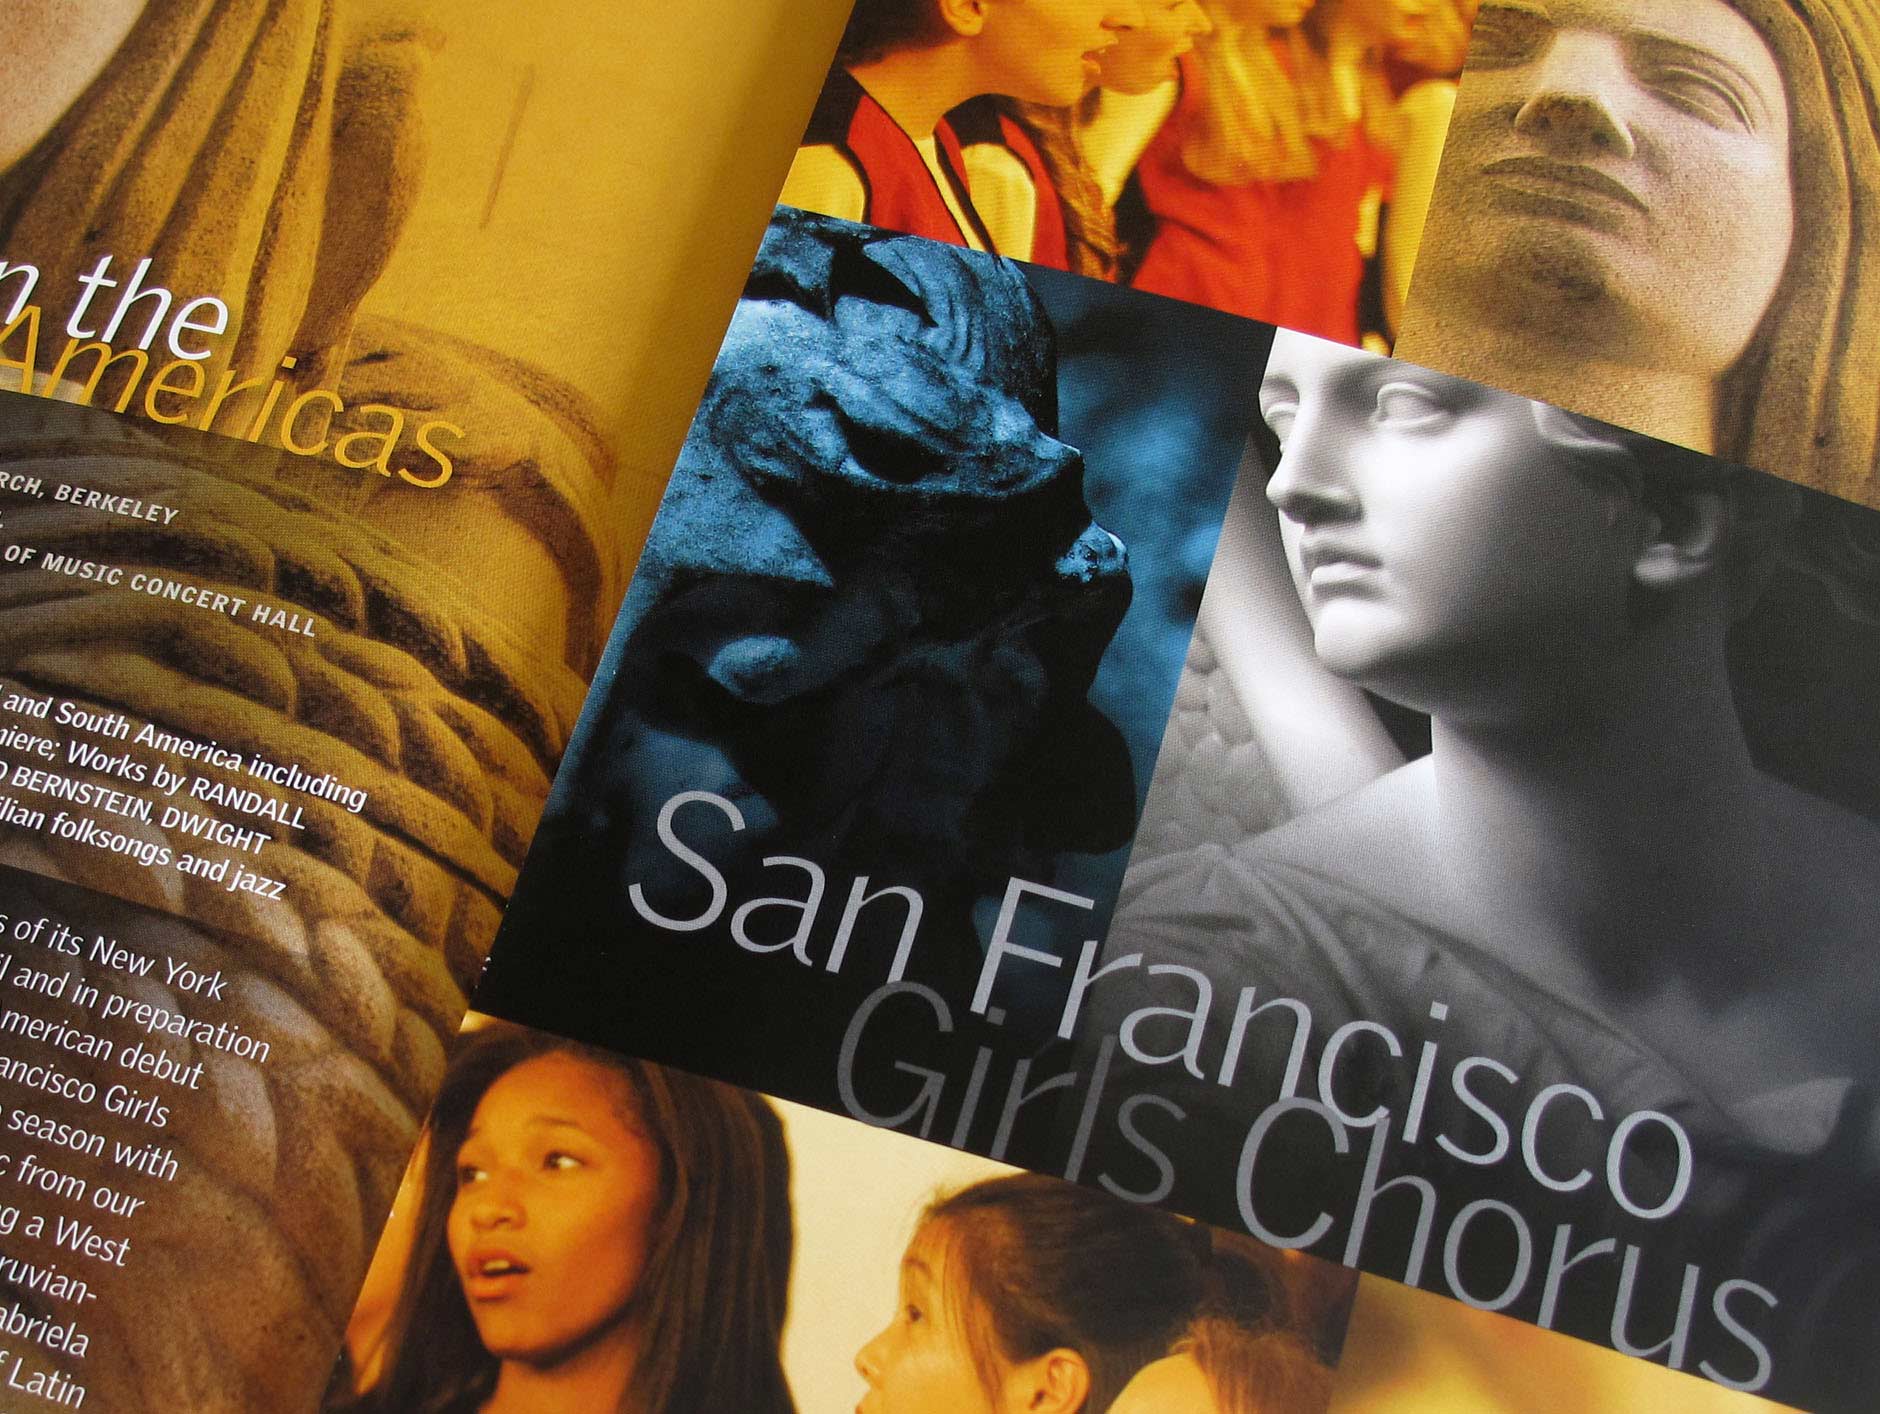 San Francisco Girls Chorus: Season Collateral